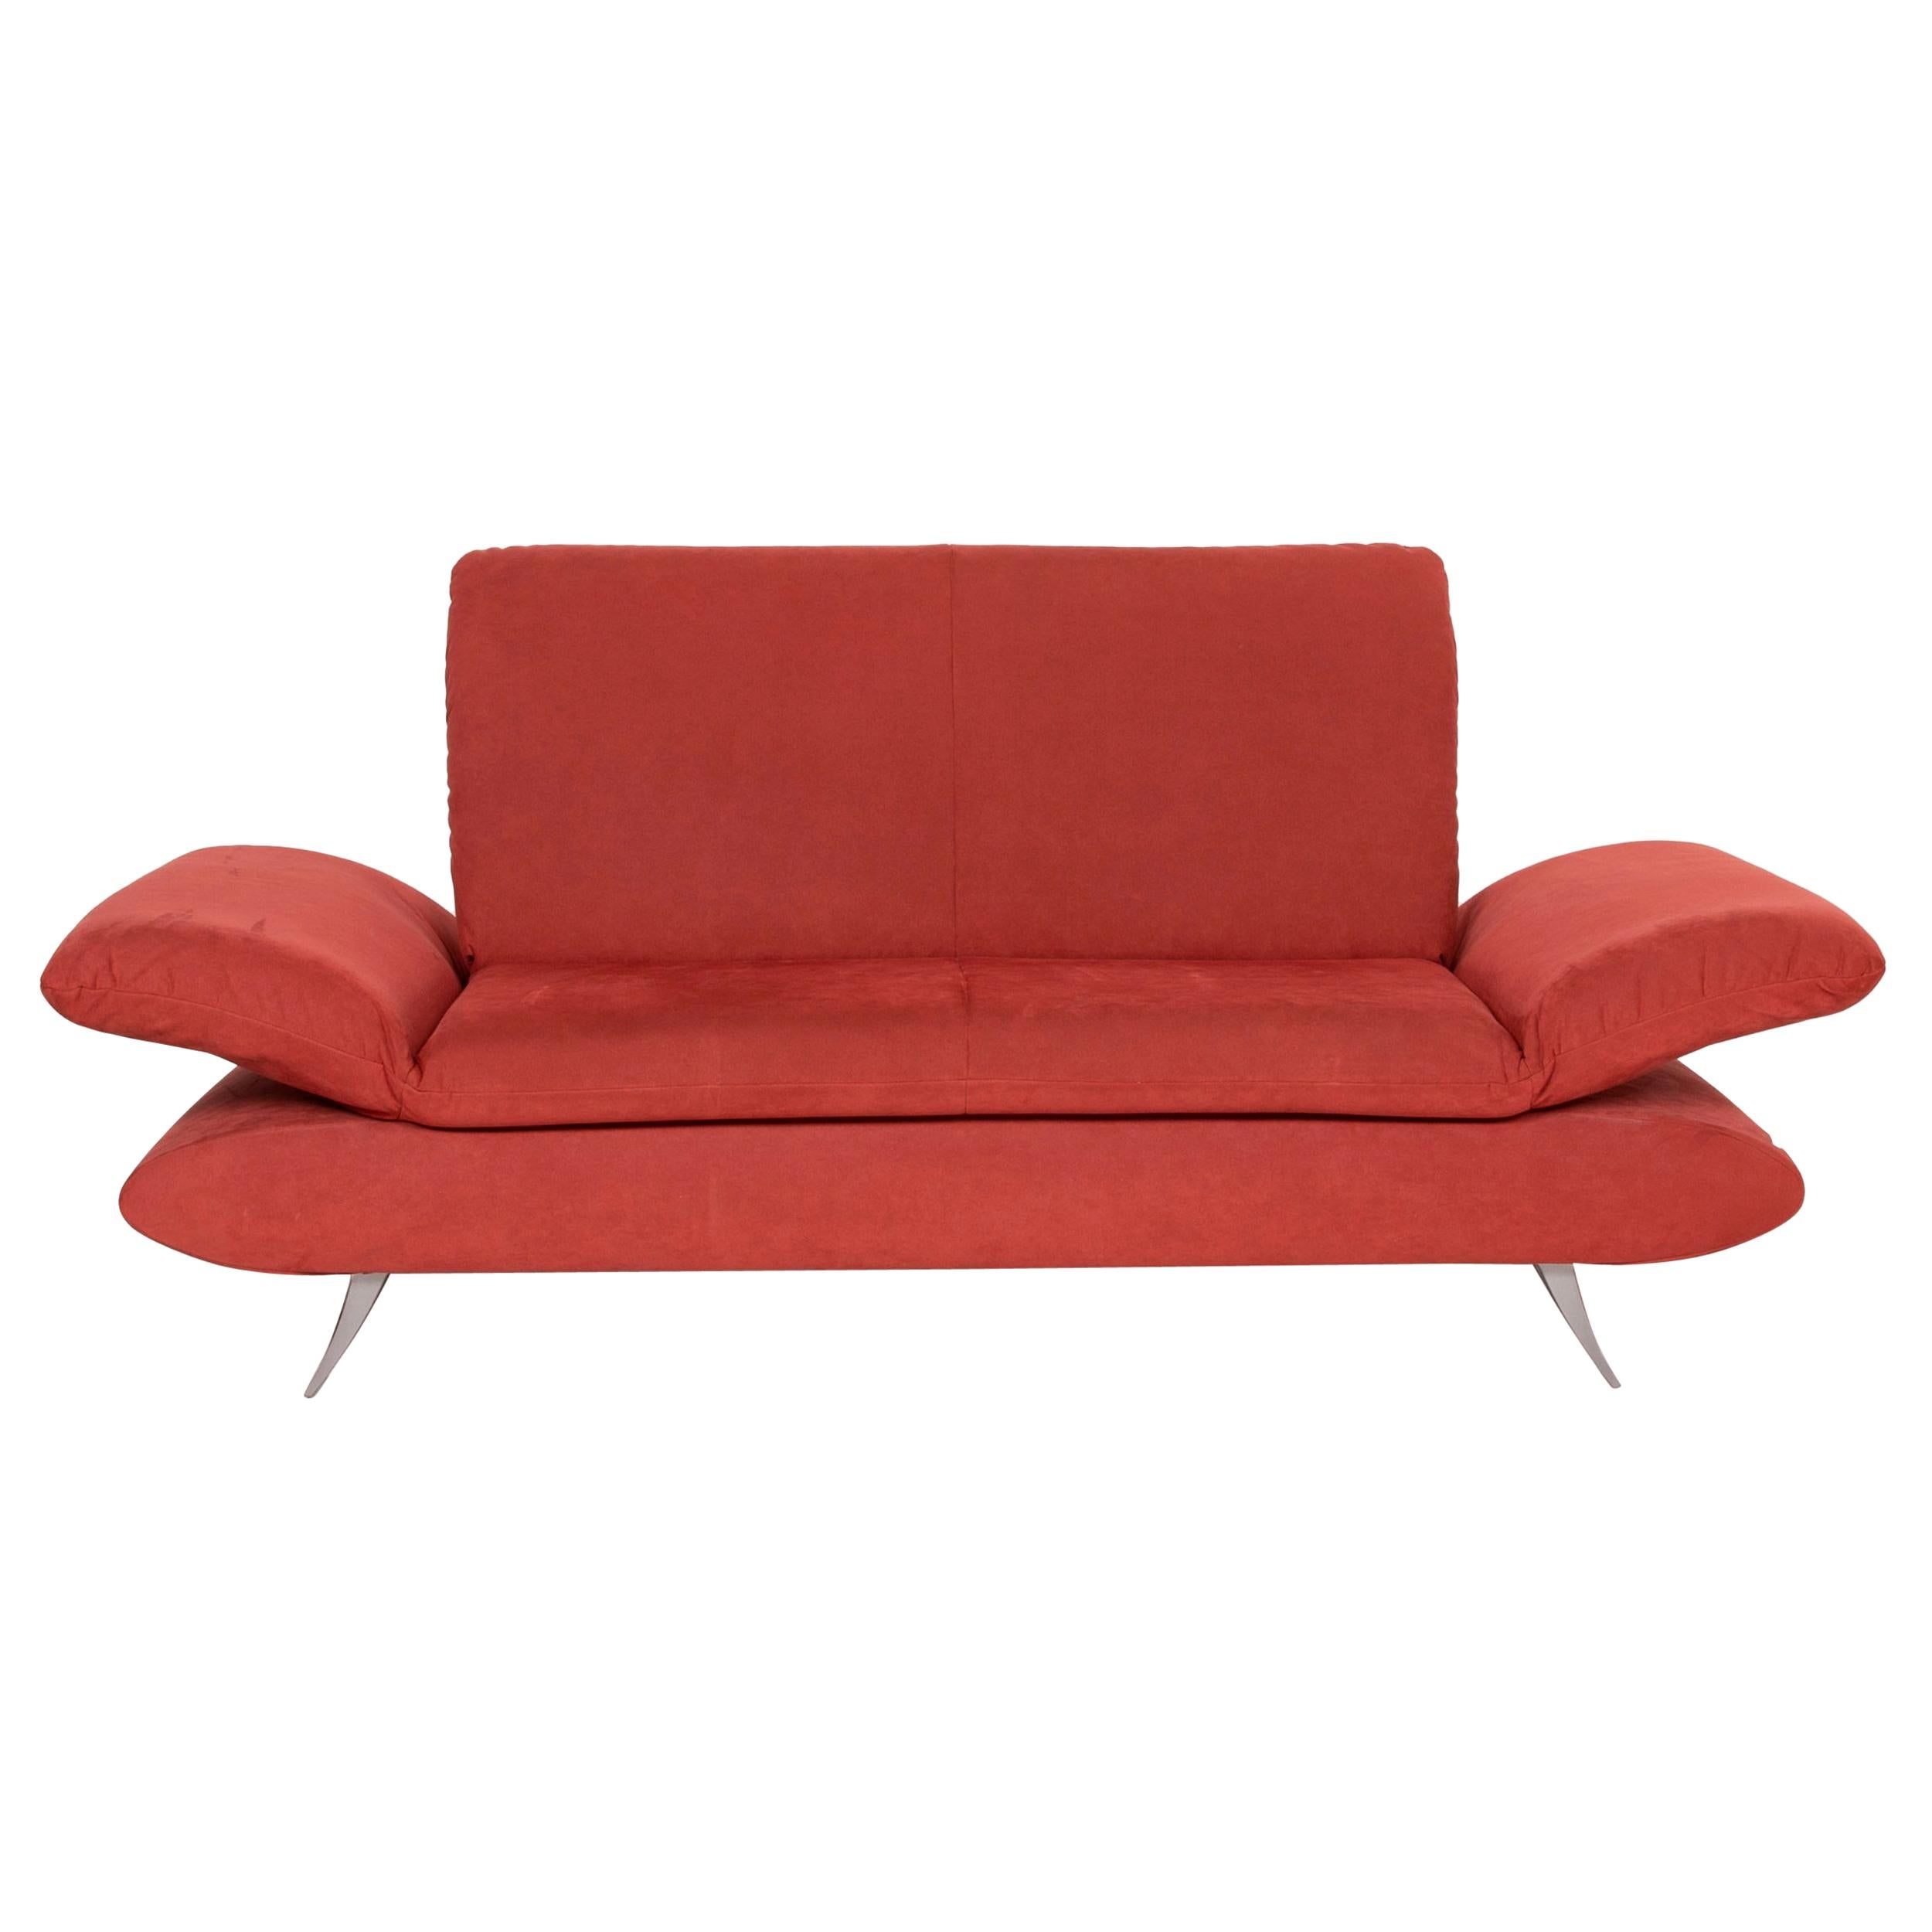 Koinor Rossini Fabric Sofa Orange Two-Seater Function